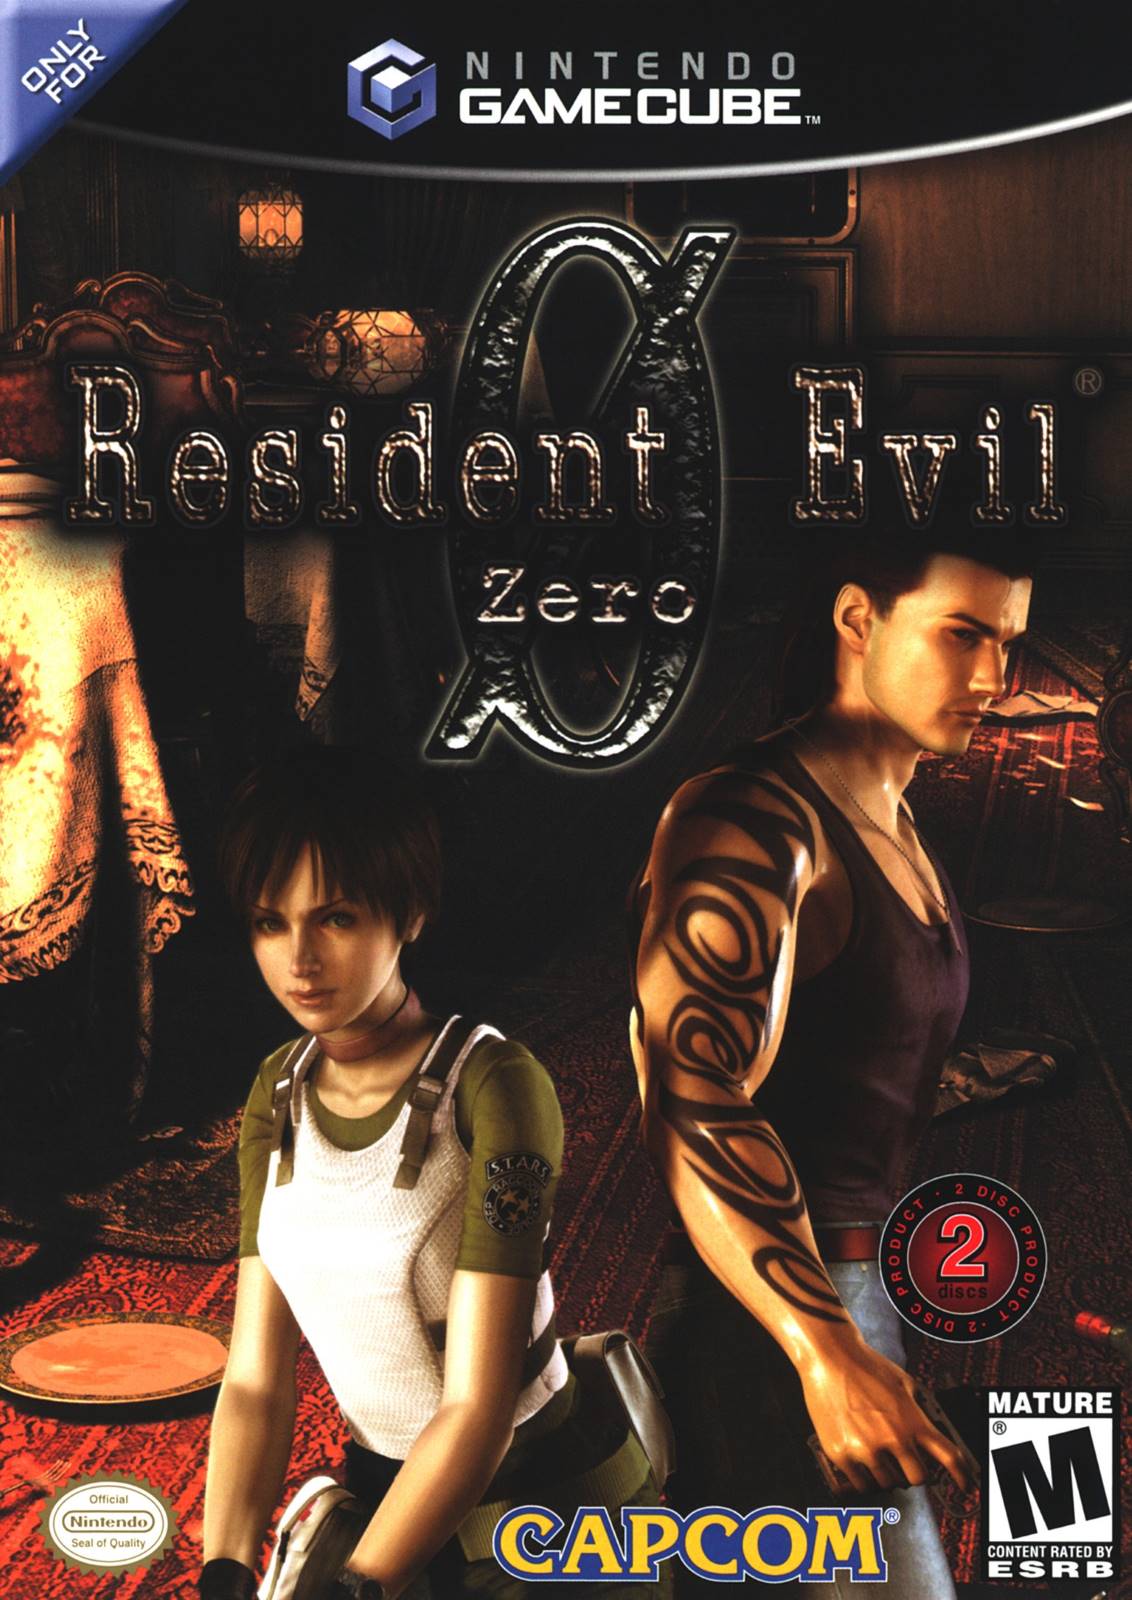 Resident Evil Zero (NTSC)